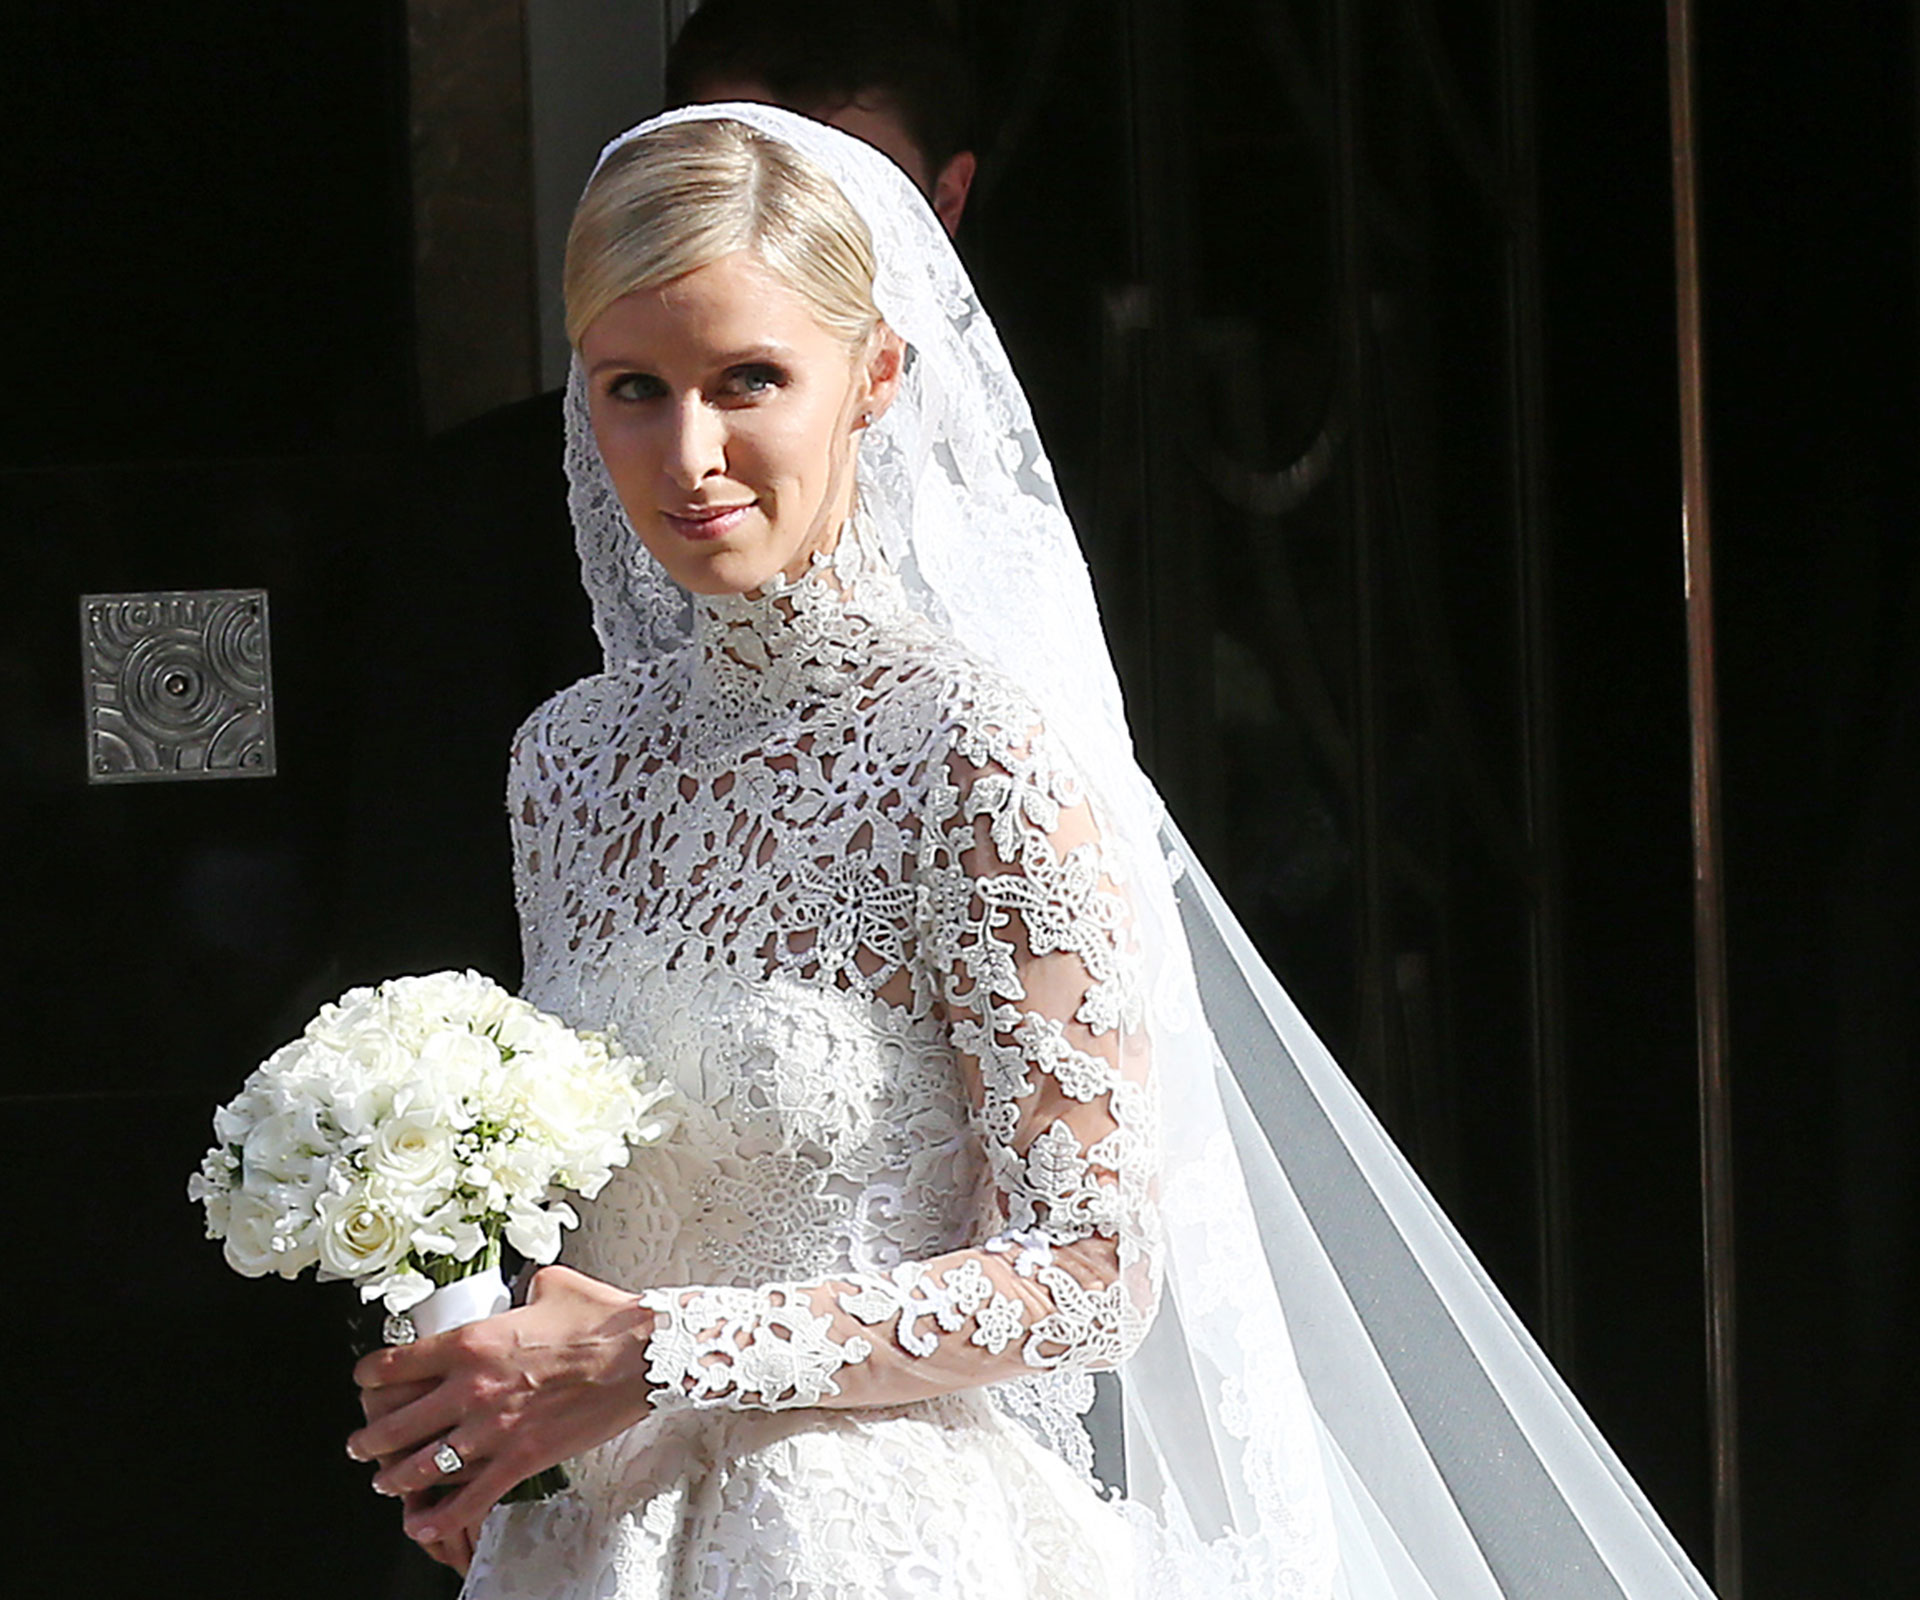 Nicky Hilton marries James Rothschild